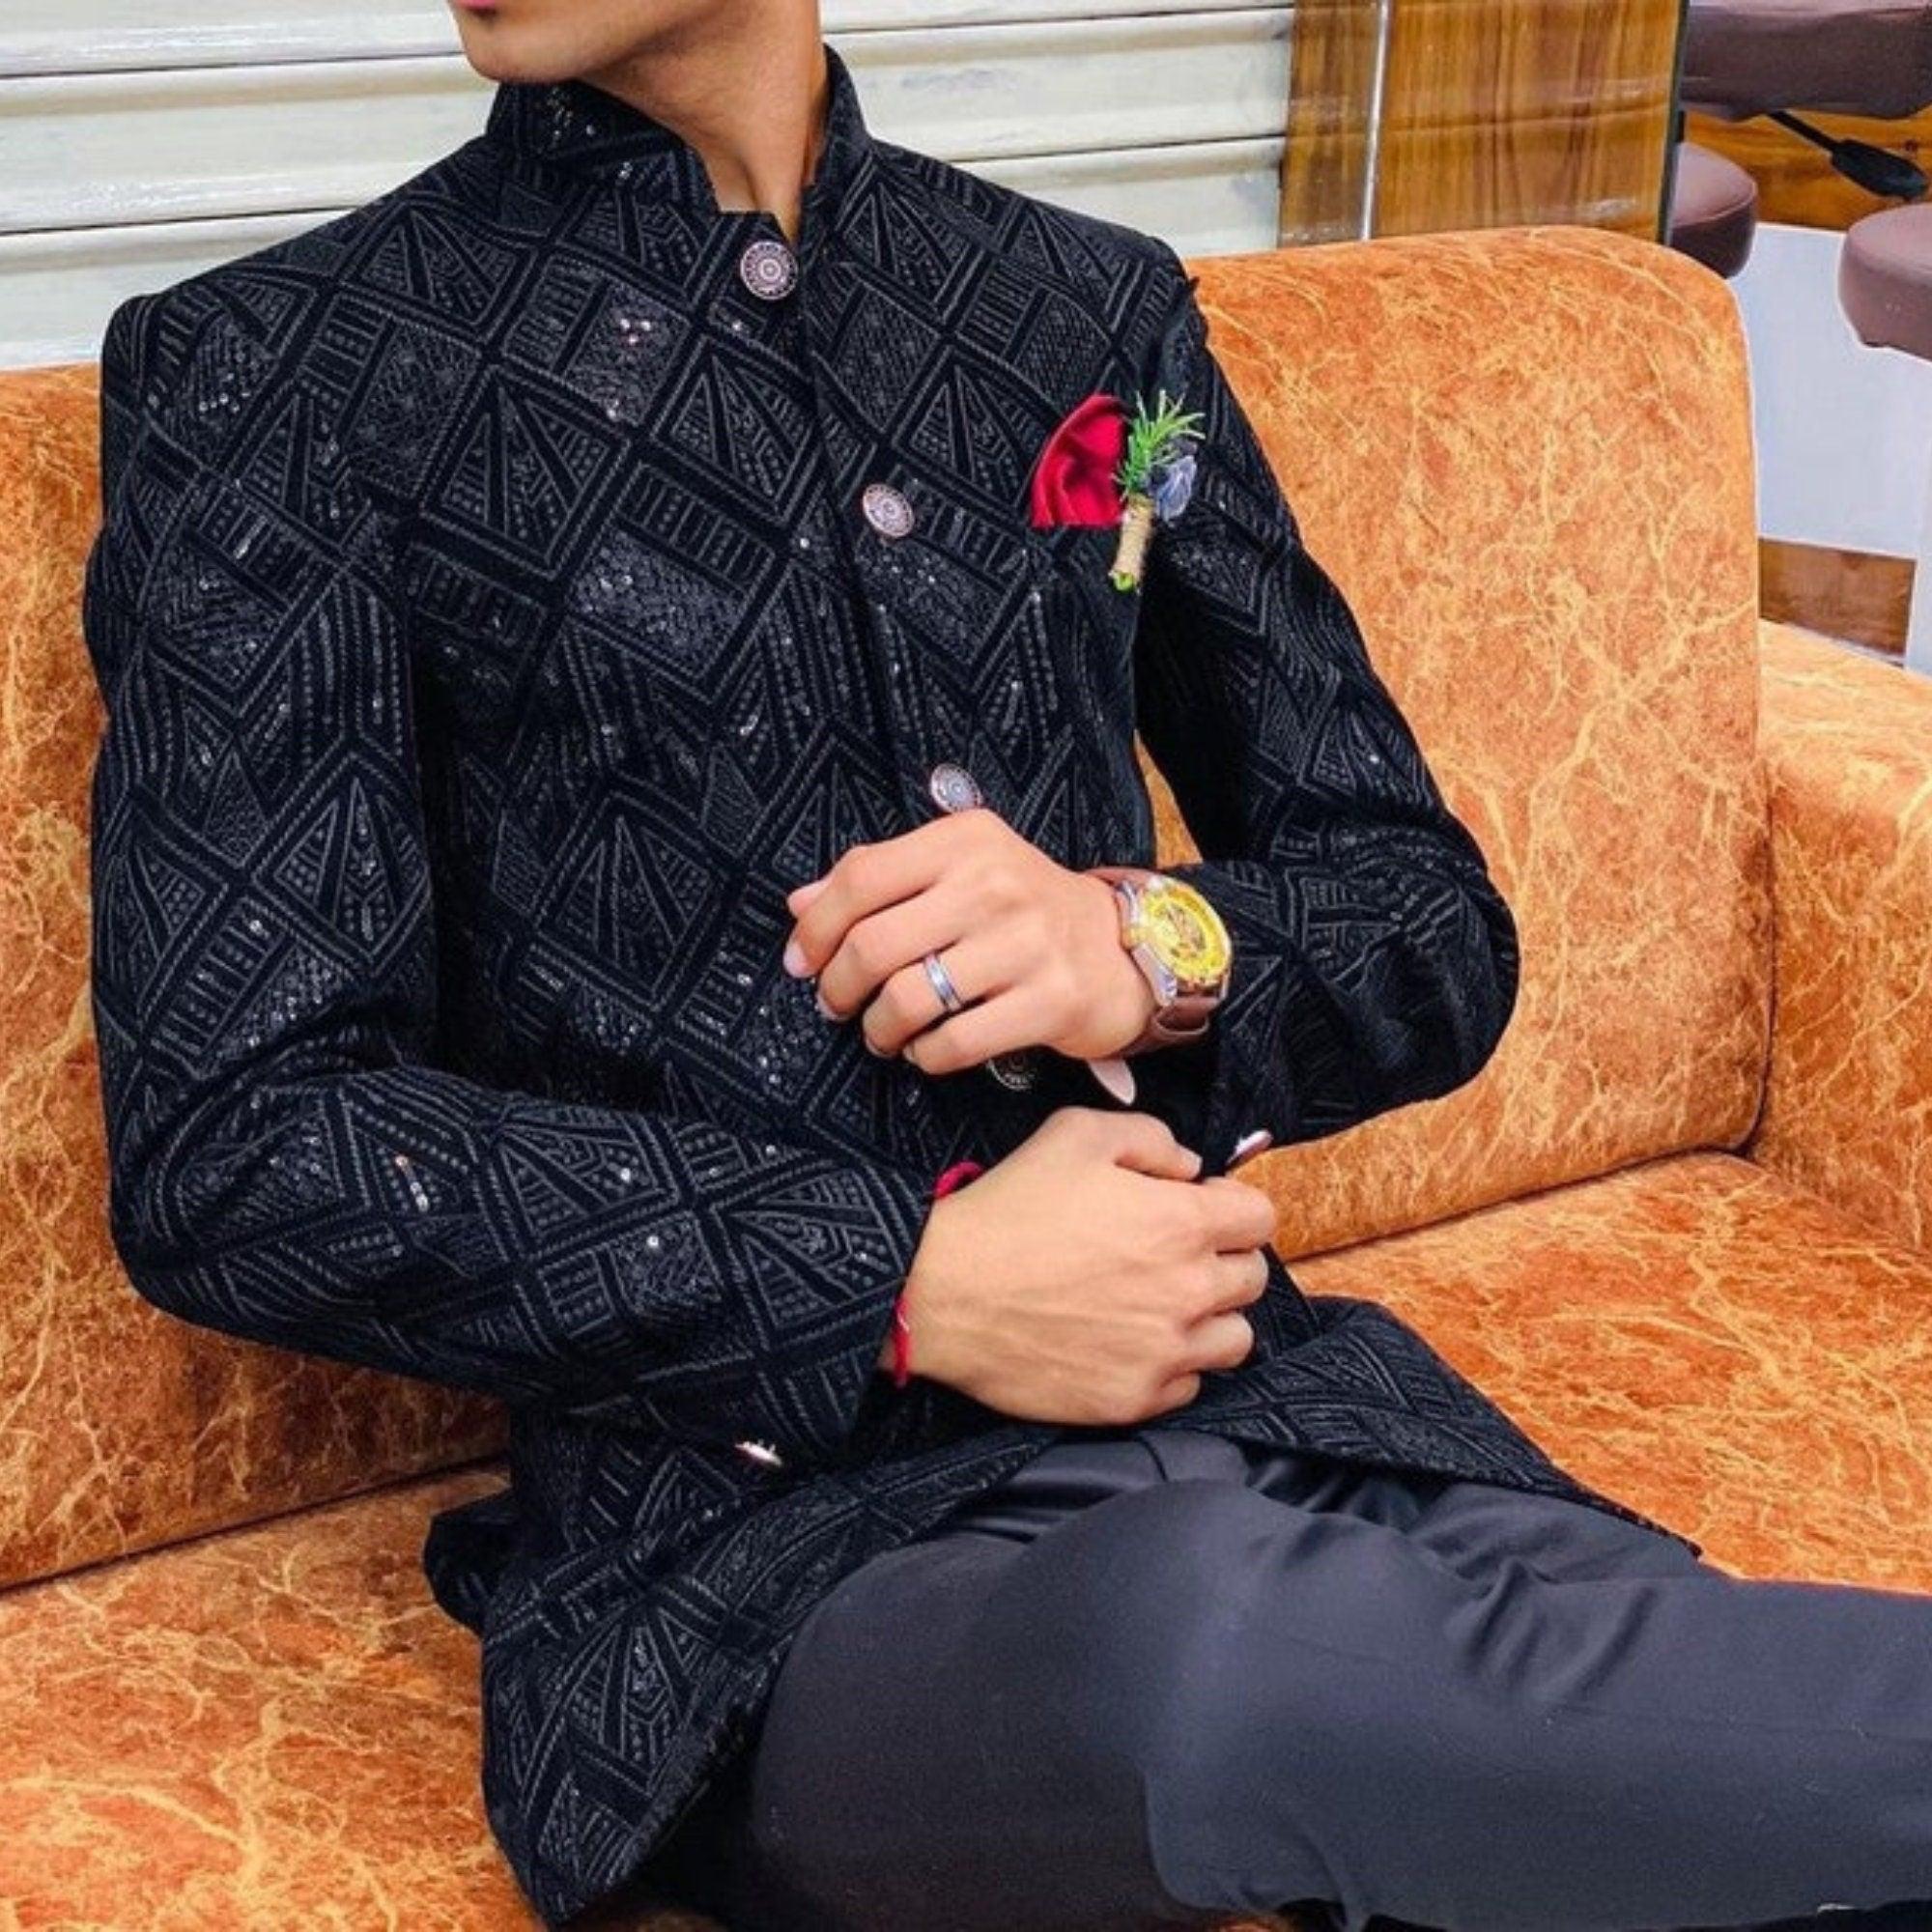 Buy Blue Sequin Patterned Jodhpuri Suit Online in the USA @Manyavar - Suit  Set for Men